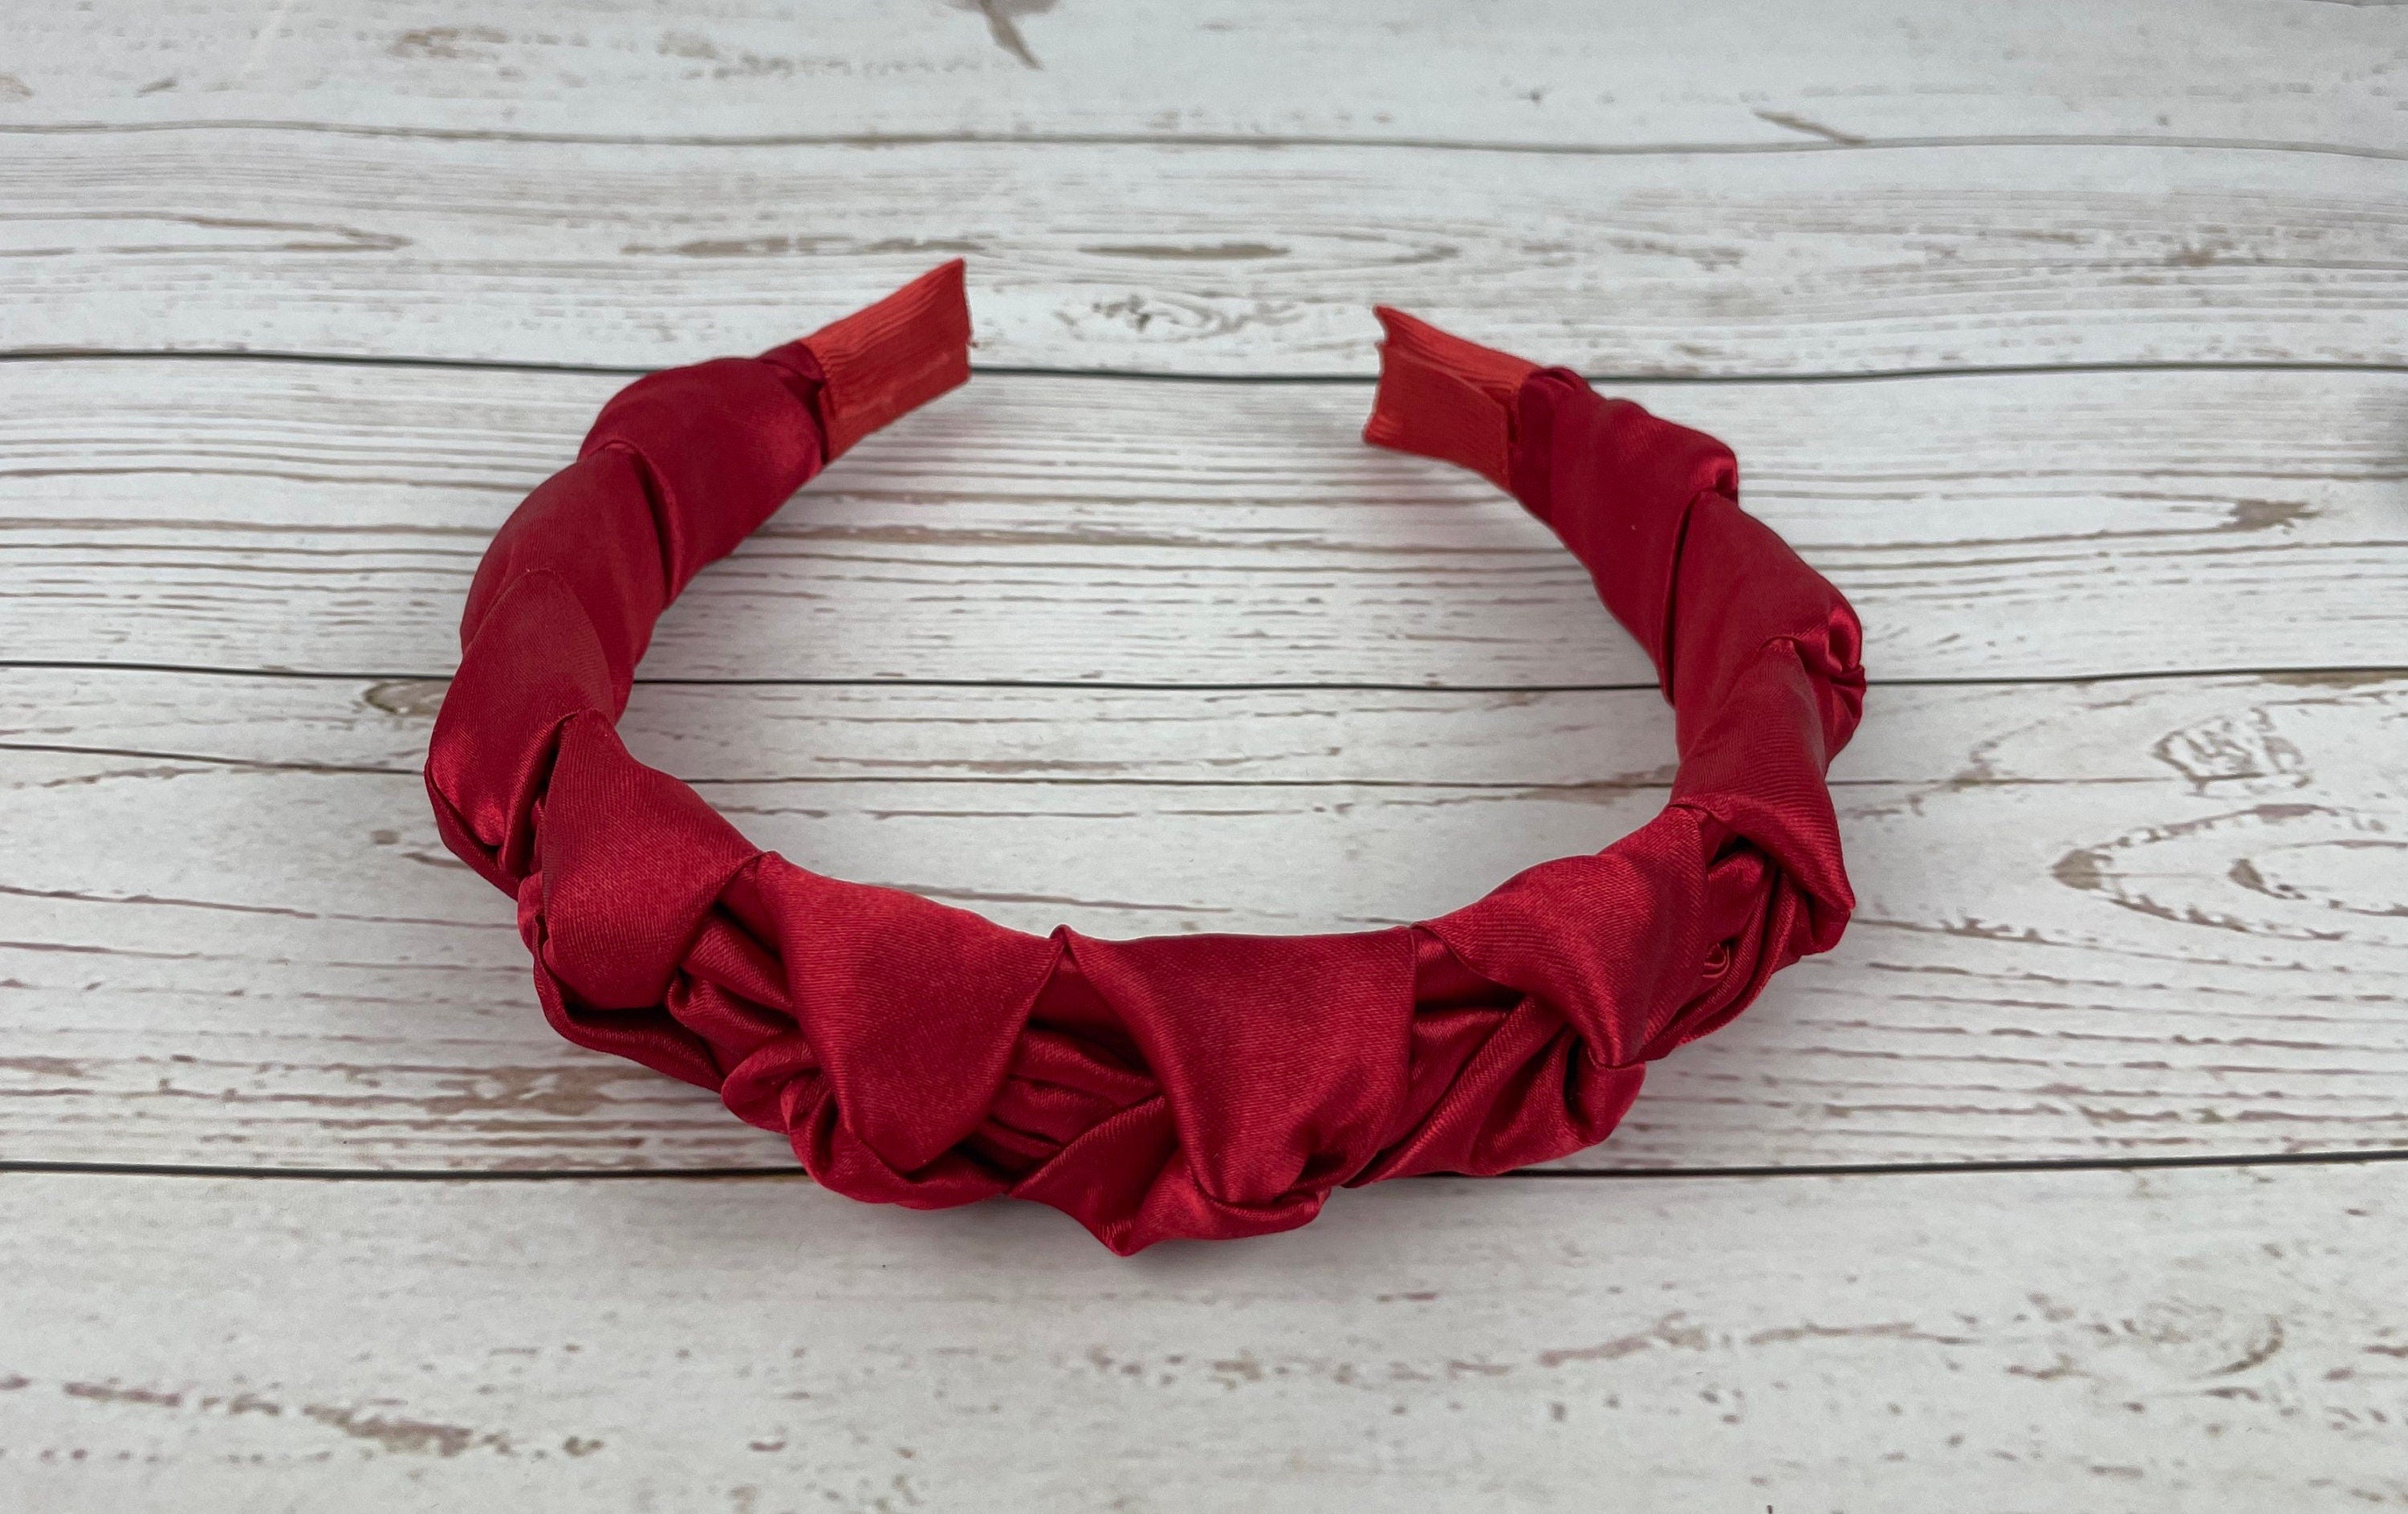 Stylish Red Satin Braided Headband - Comfortable and Fashionable Thin Headband for Women - Great Gift Idea